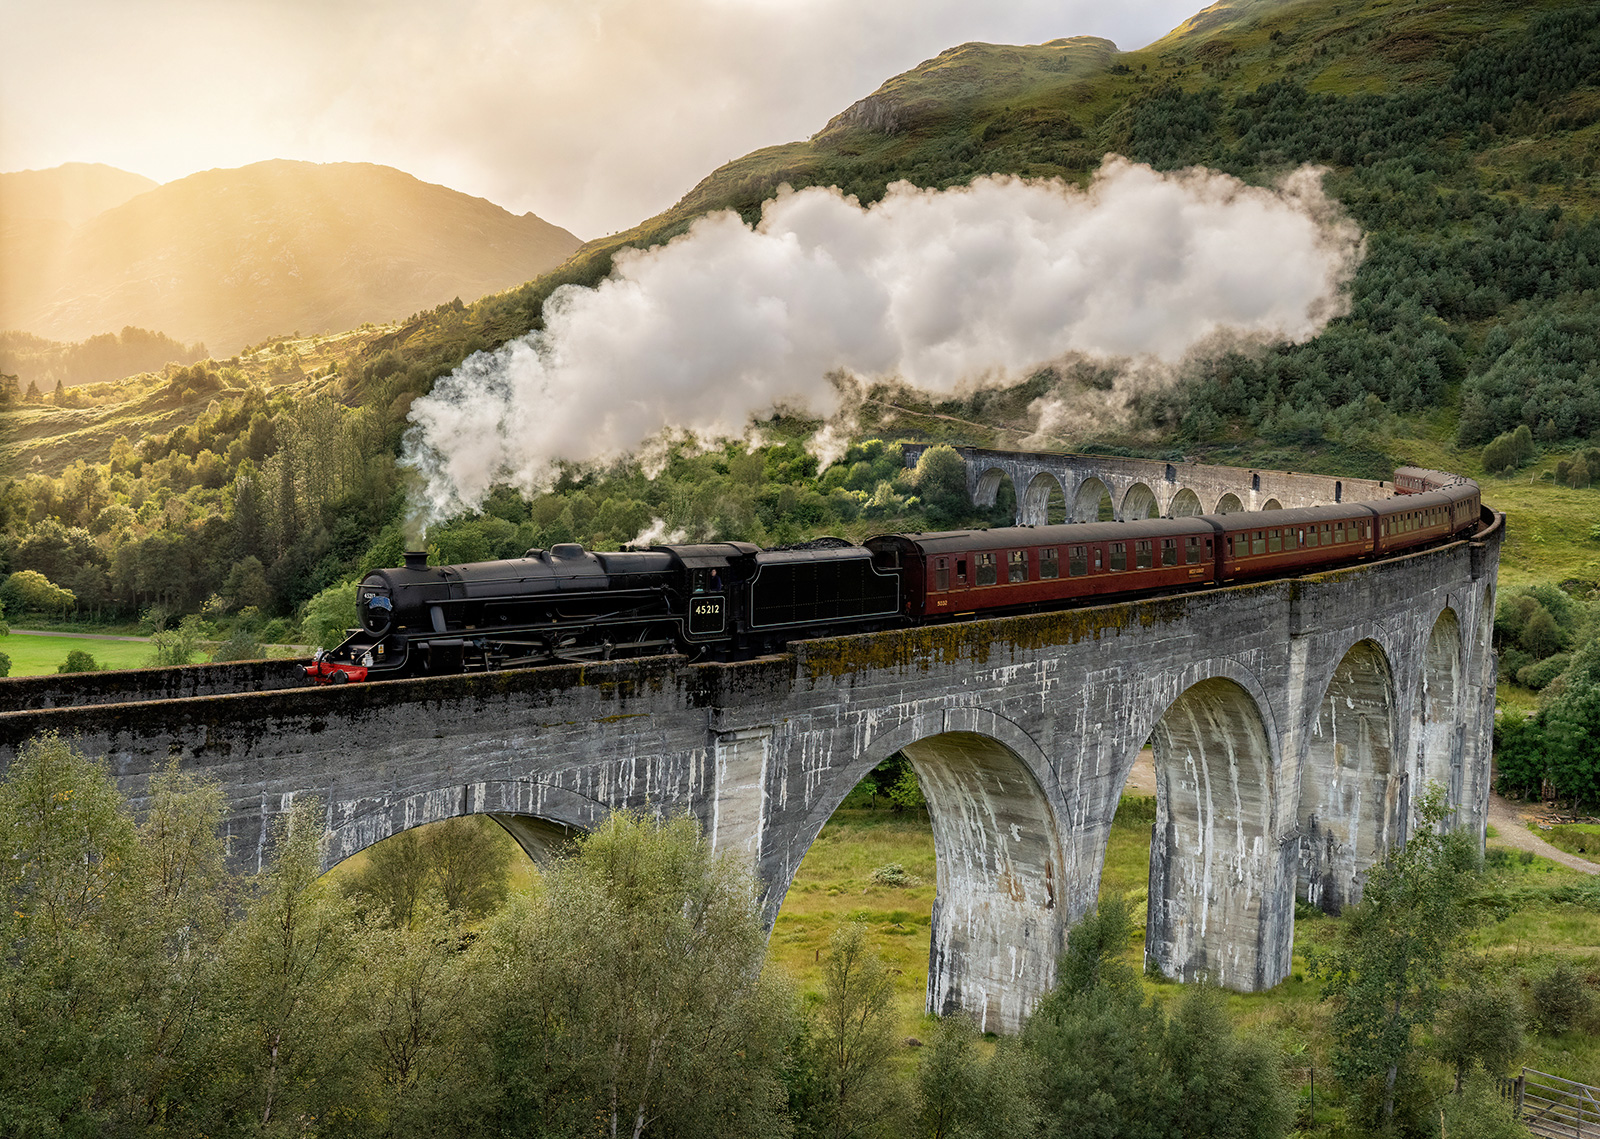 Stiptheid Snel zoete smaak The world's most incredible rail journeys | CNN Travel